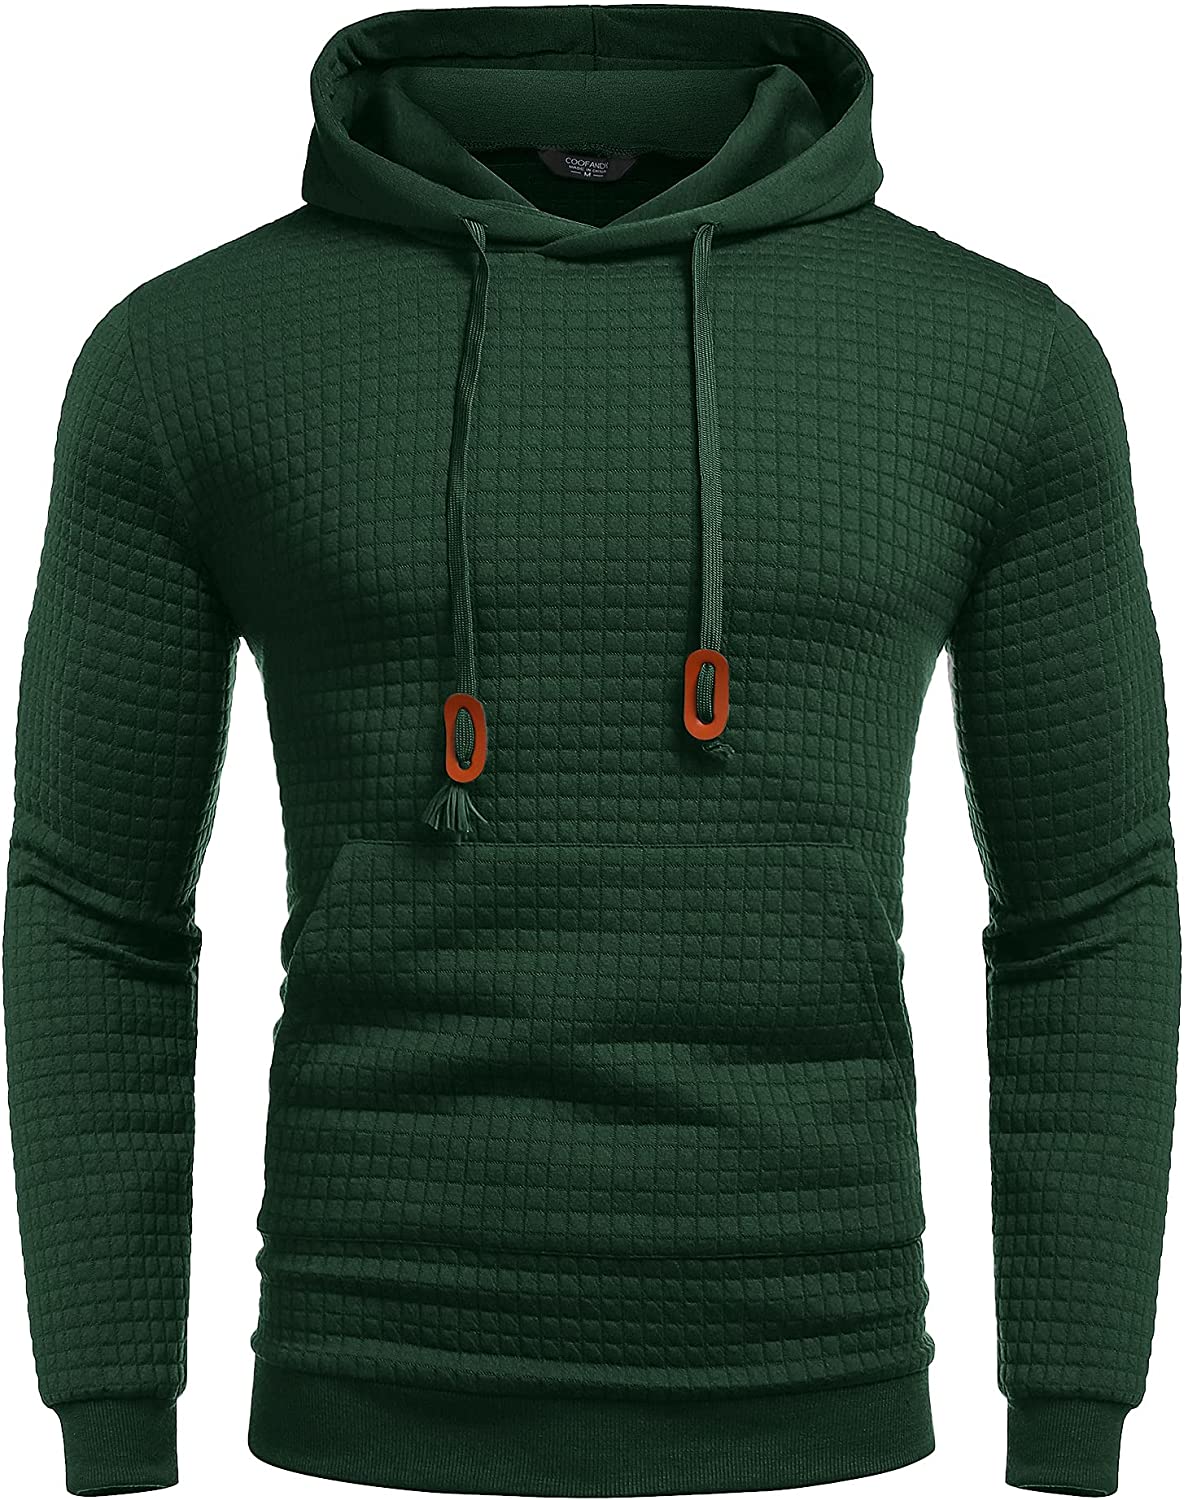 COOFANDY Men's Hooded Sweatshirt Long Sleeve Fashion Gym Athletic 